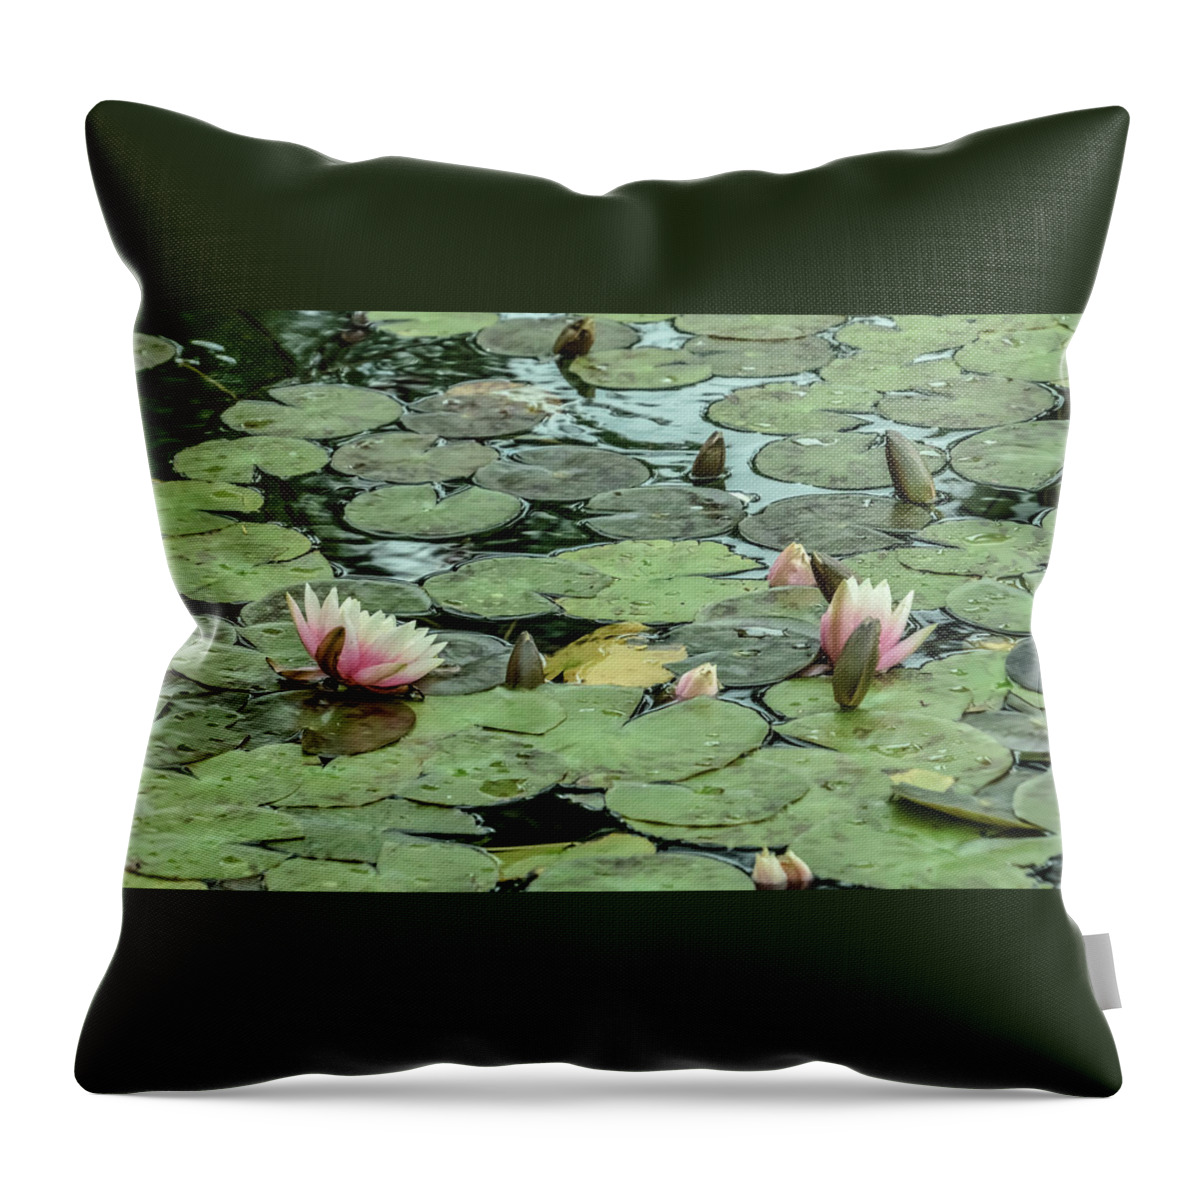 Purity Throw Pillow featuring the photograph Lotus Blossoms by Christina McGoran